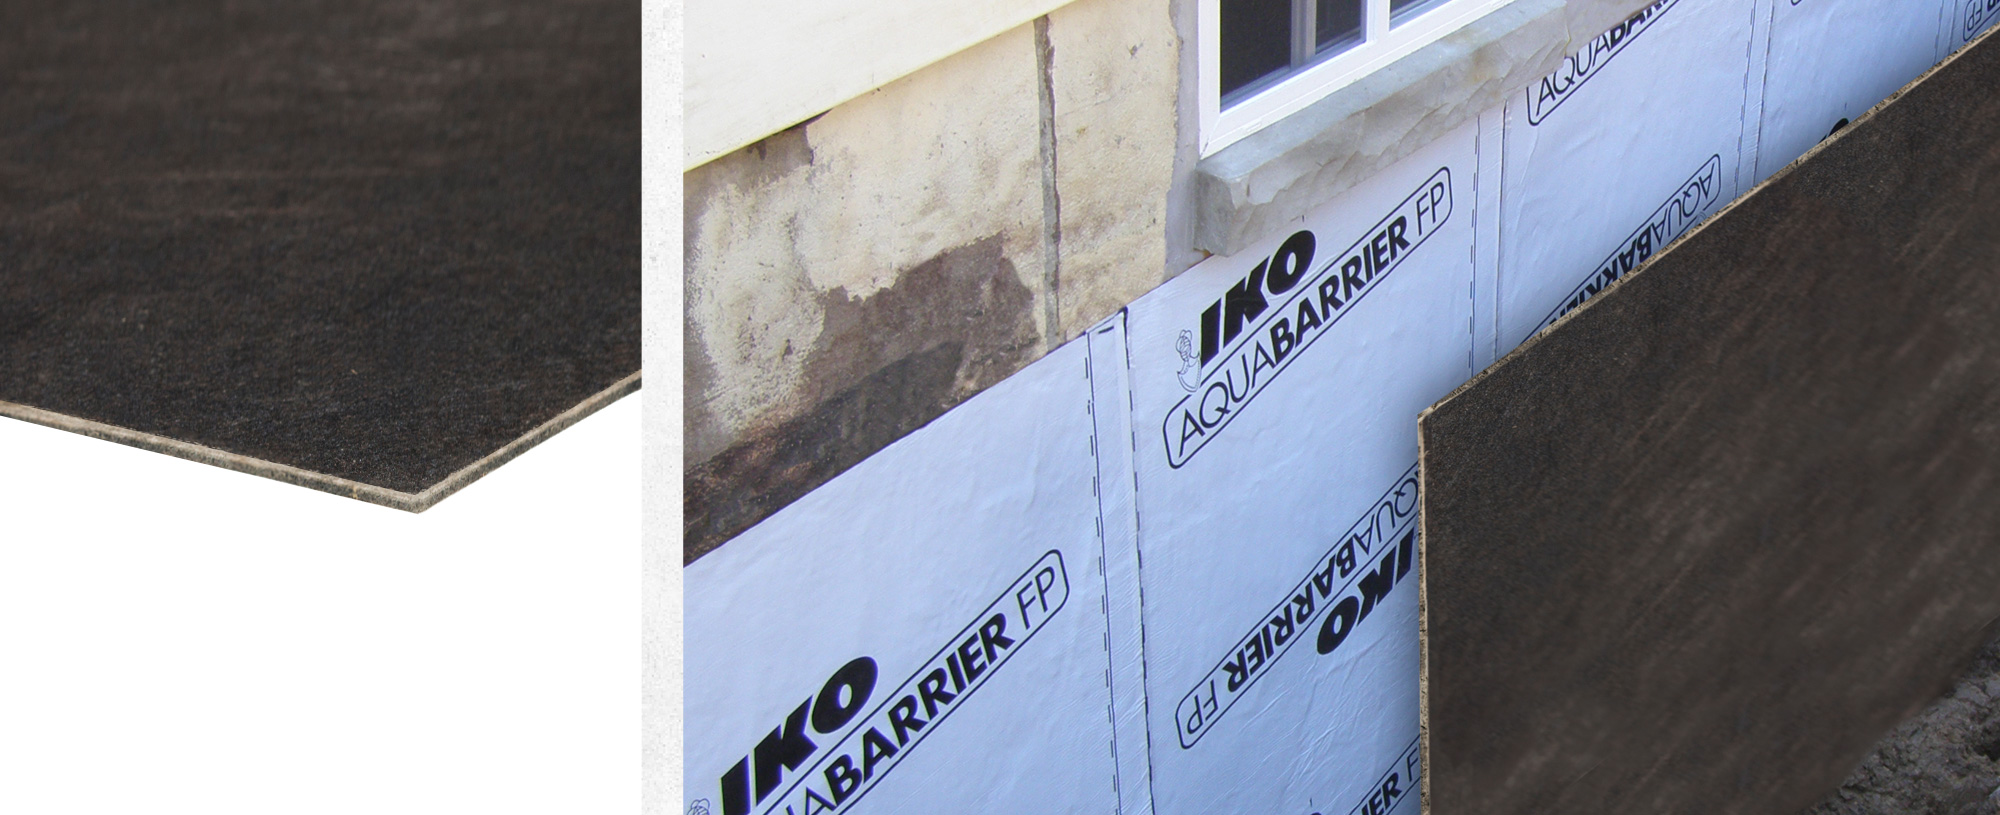 Below Grade Waterproofing Protection Board - Backfill Protection - IKO